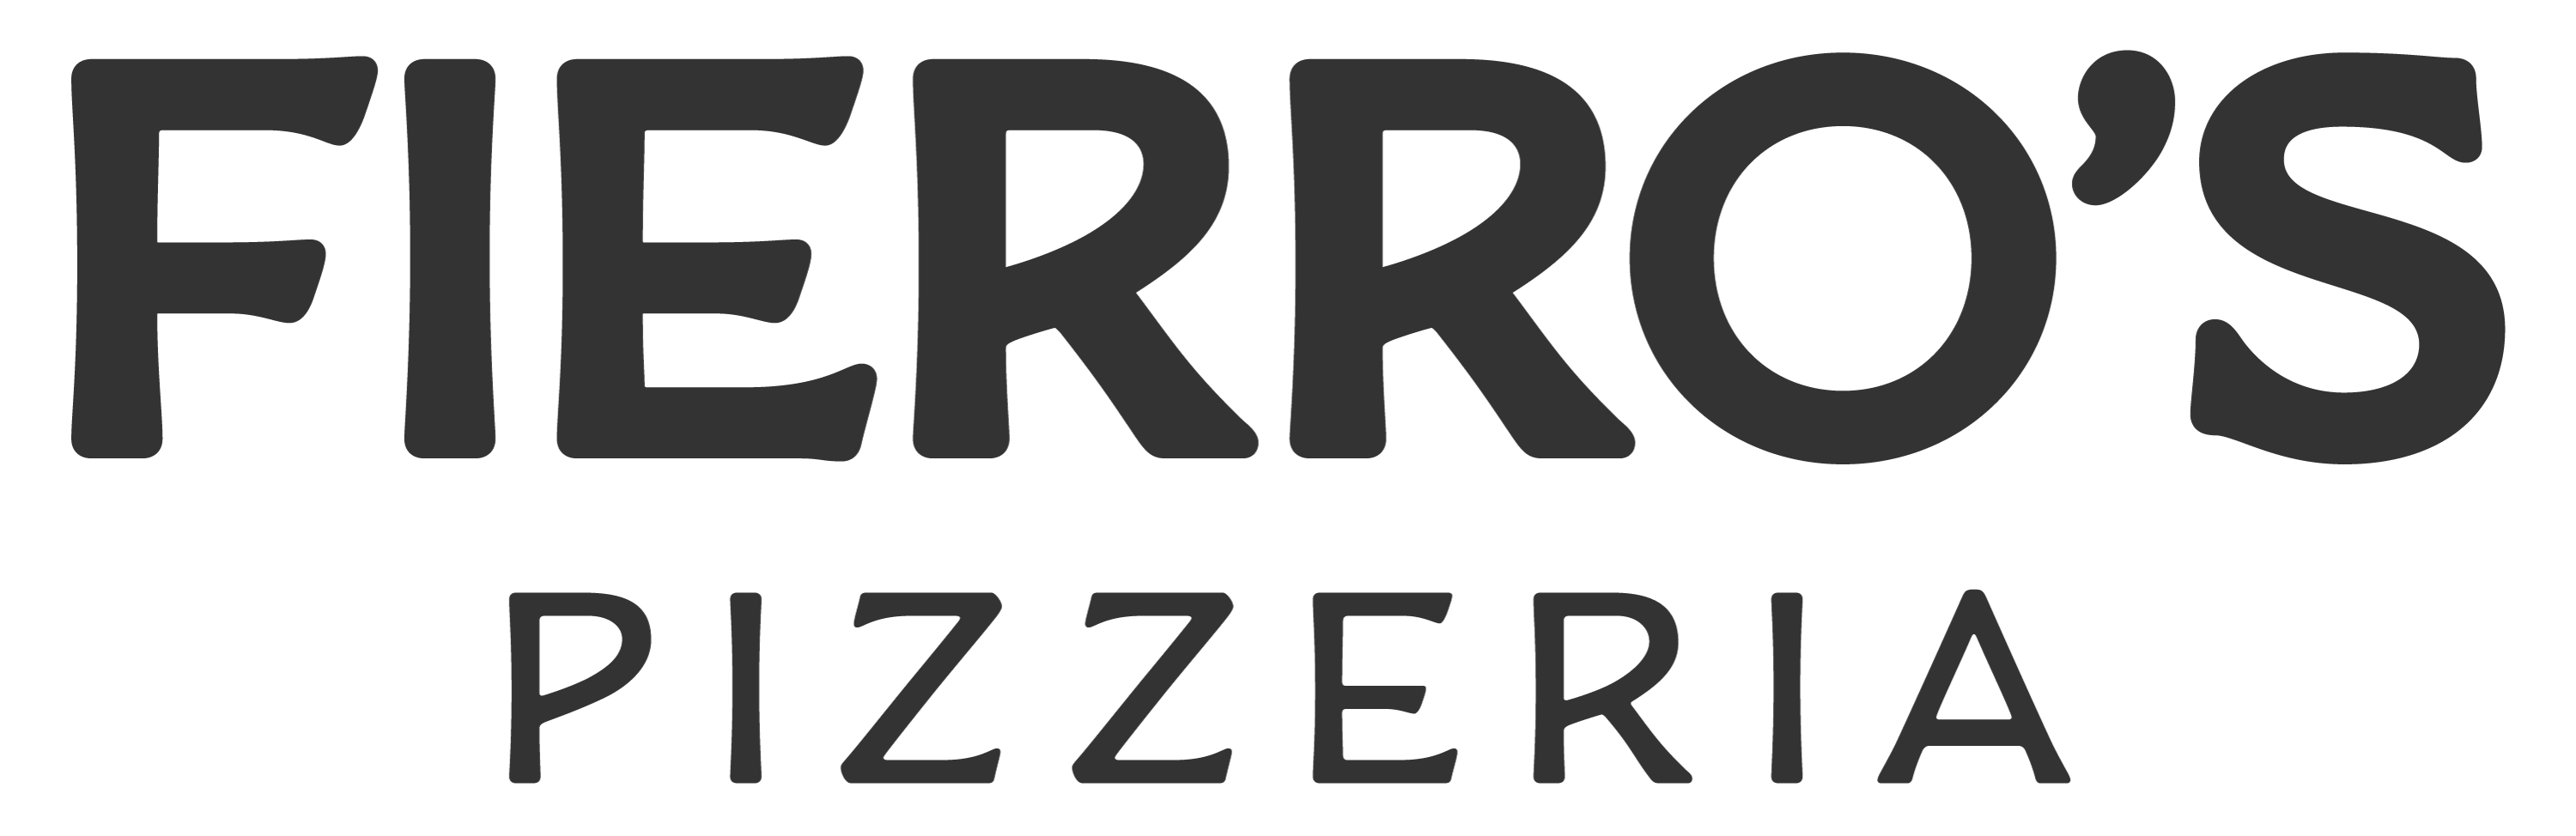 fierro's pizzeria re-branding logo design